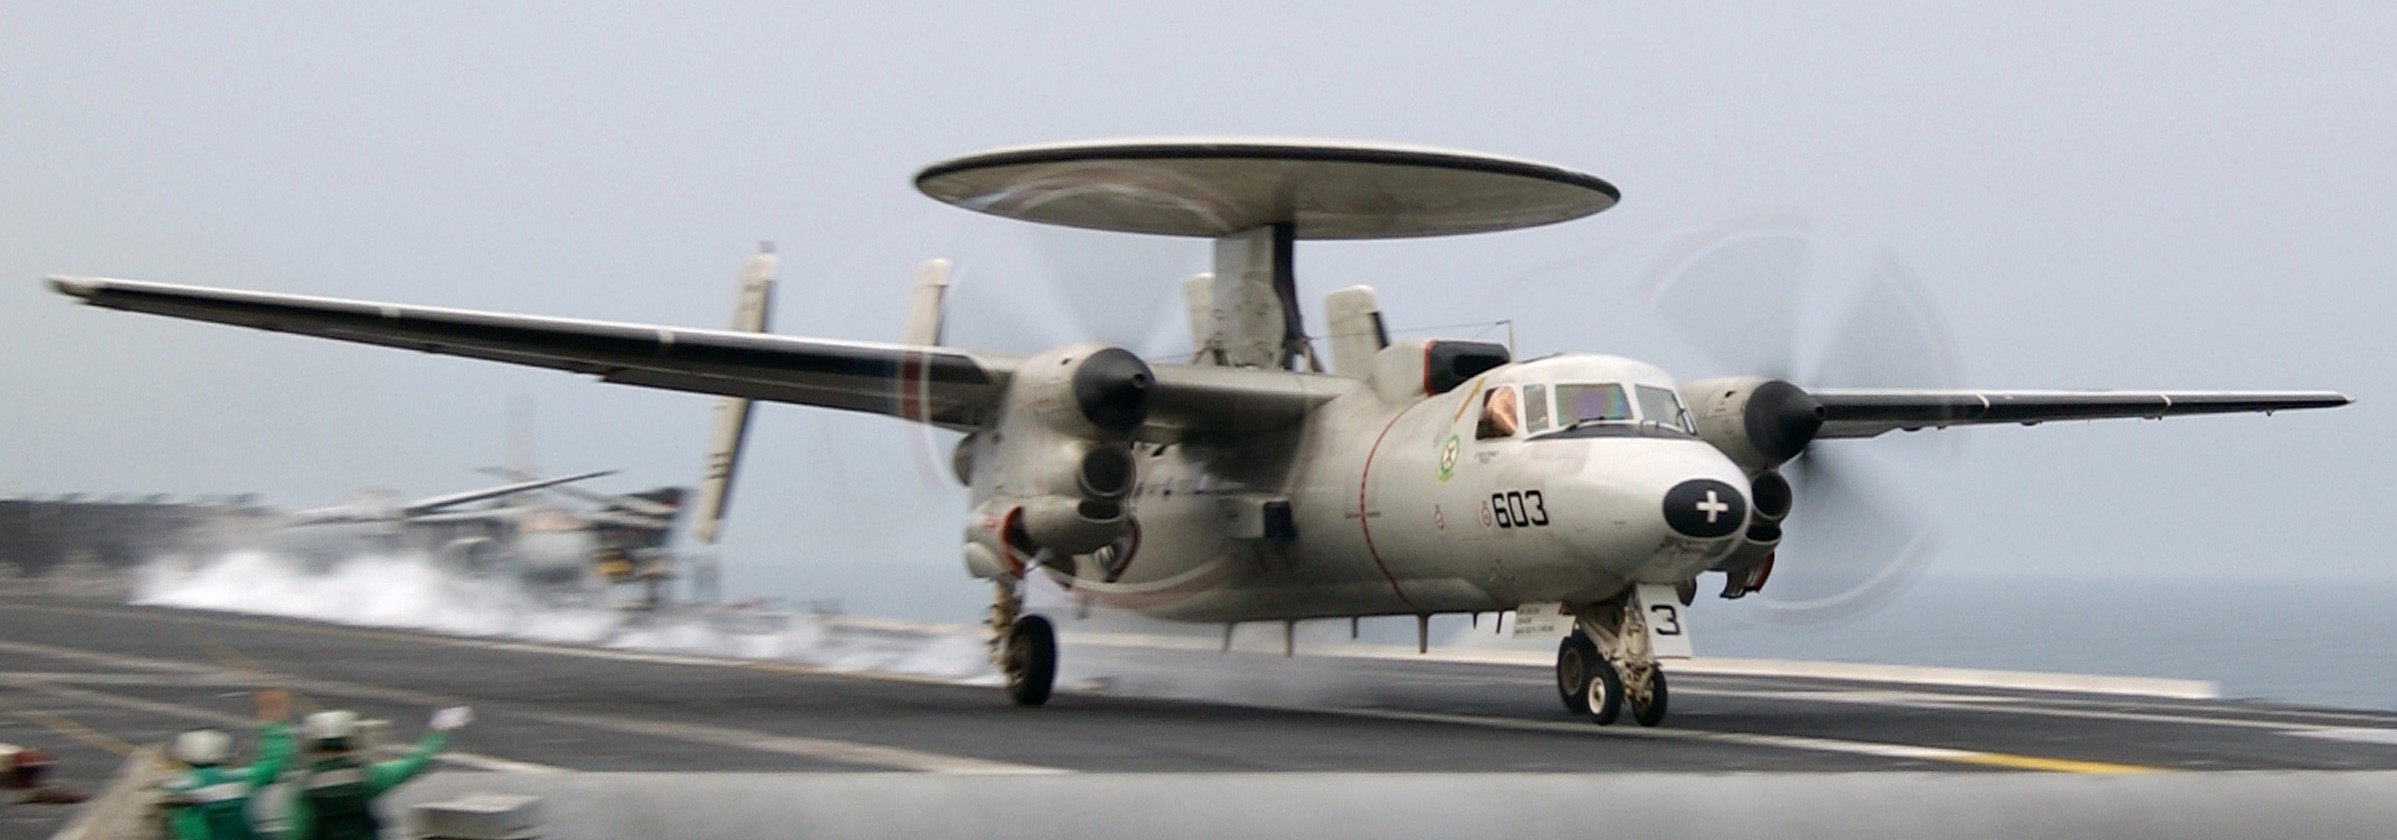 vaw-115 liberty bells carrier airborne early warning squadron us navy grumman e-2c hawkeye cvw-5 uss kitty hawk cv-63 13